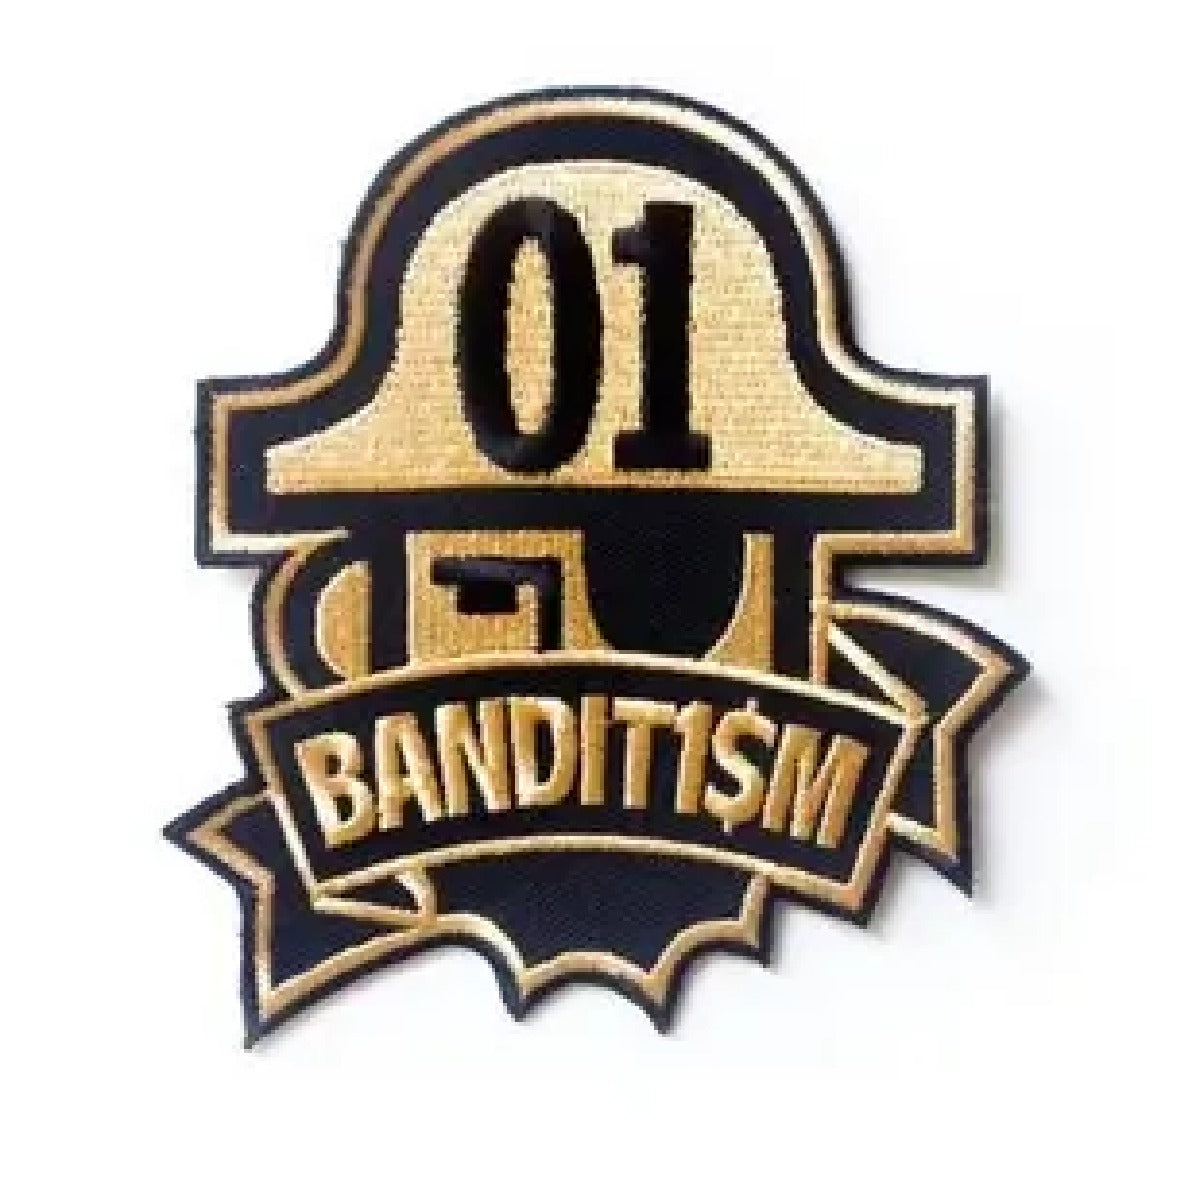 Banditism patch